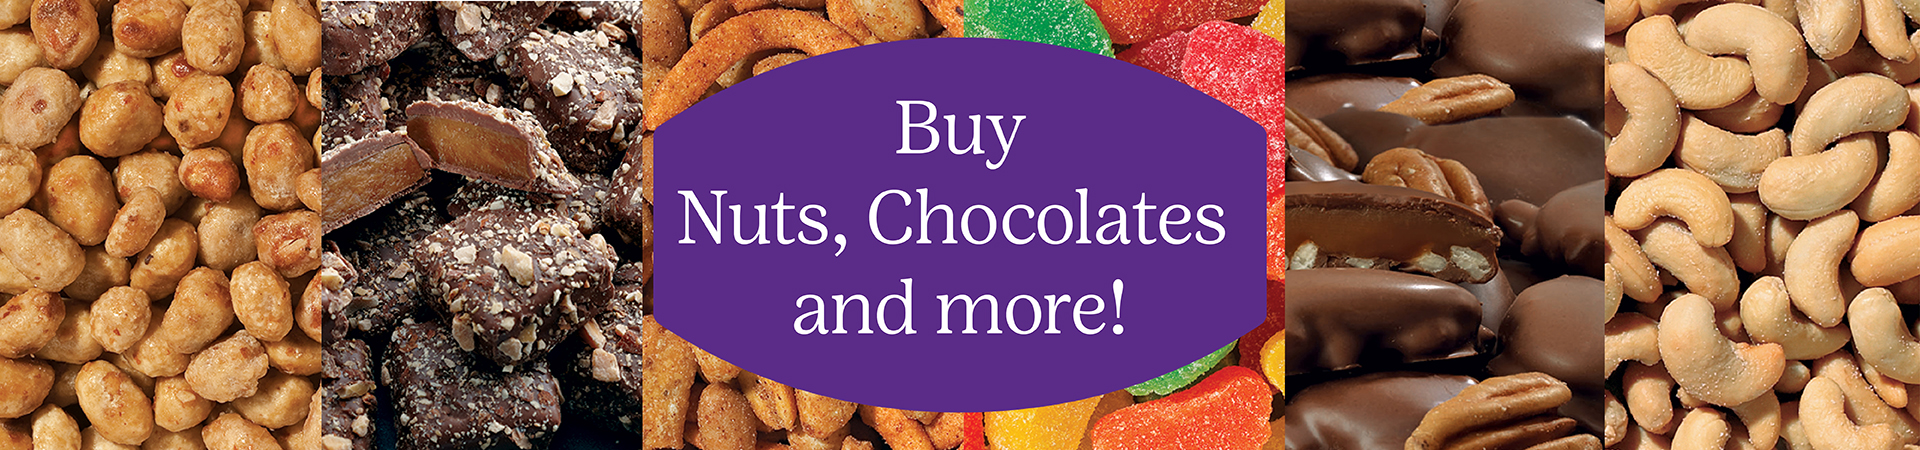  buy nuts, chocolate & magazines graphic 